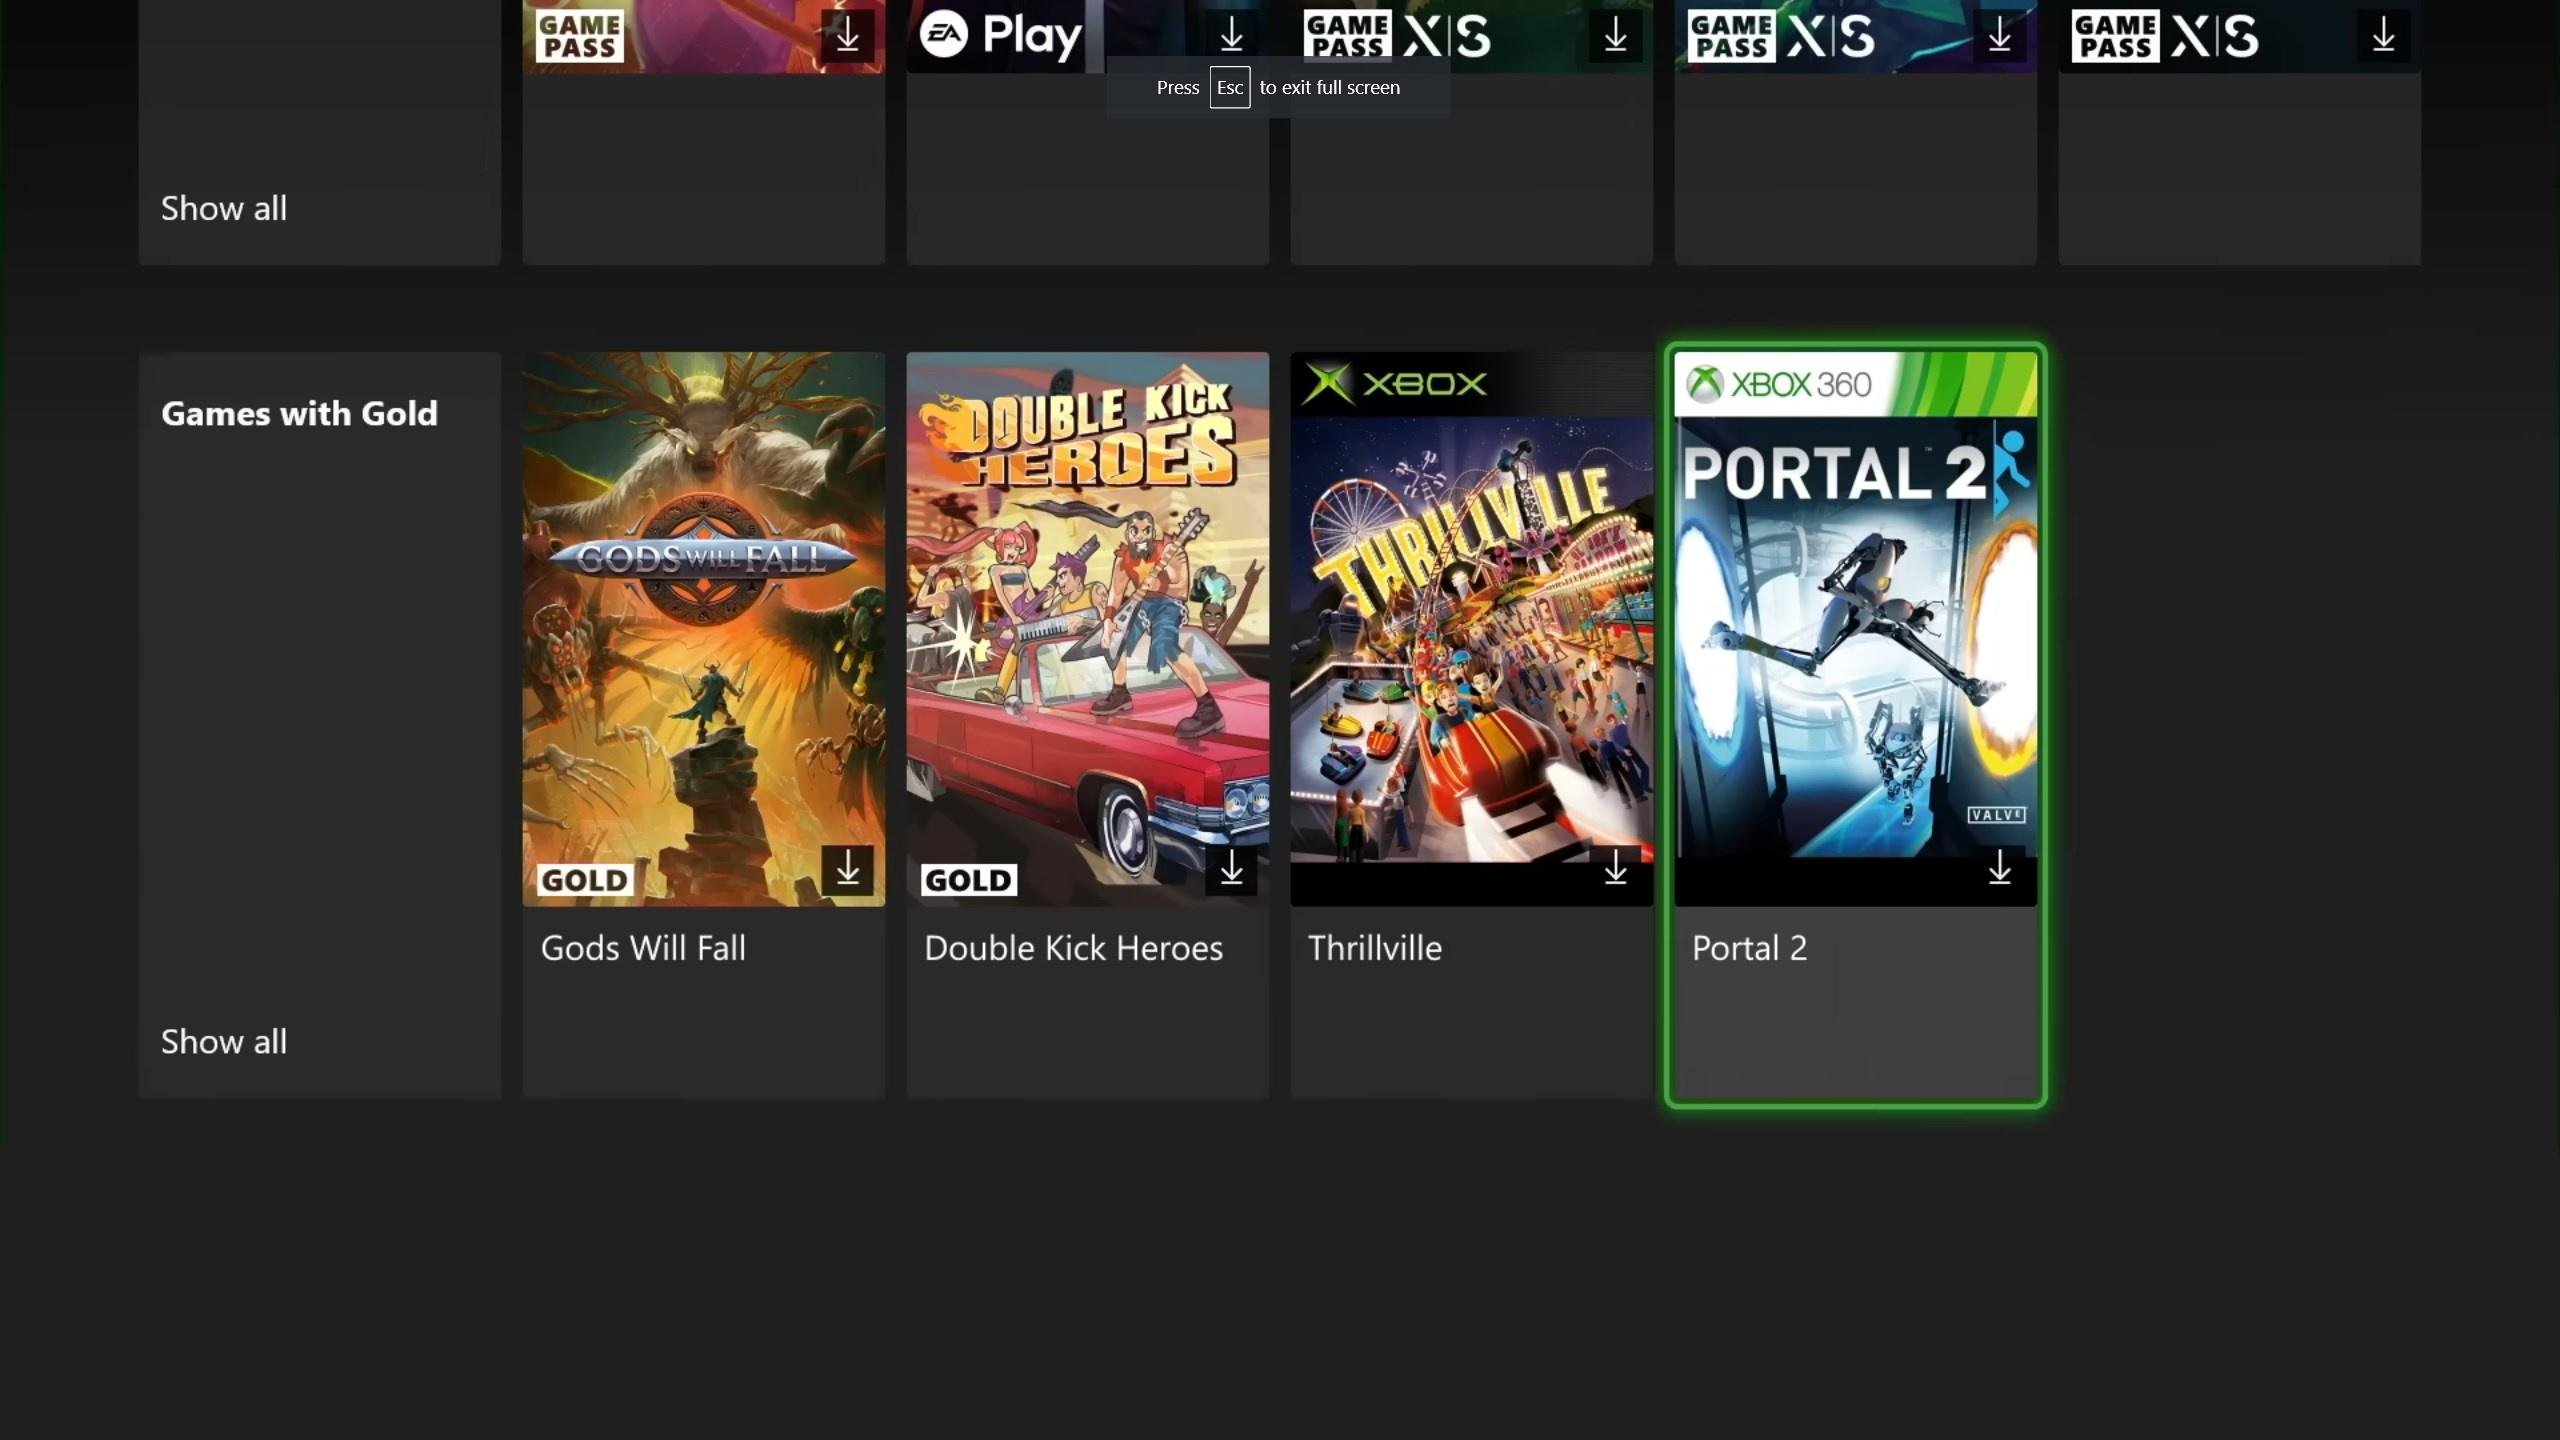 Portal 2 - Xbox 360 / Xbox One - Game Games - Loja de Games Online